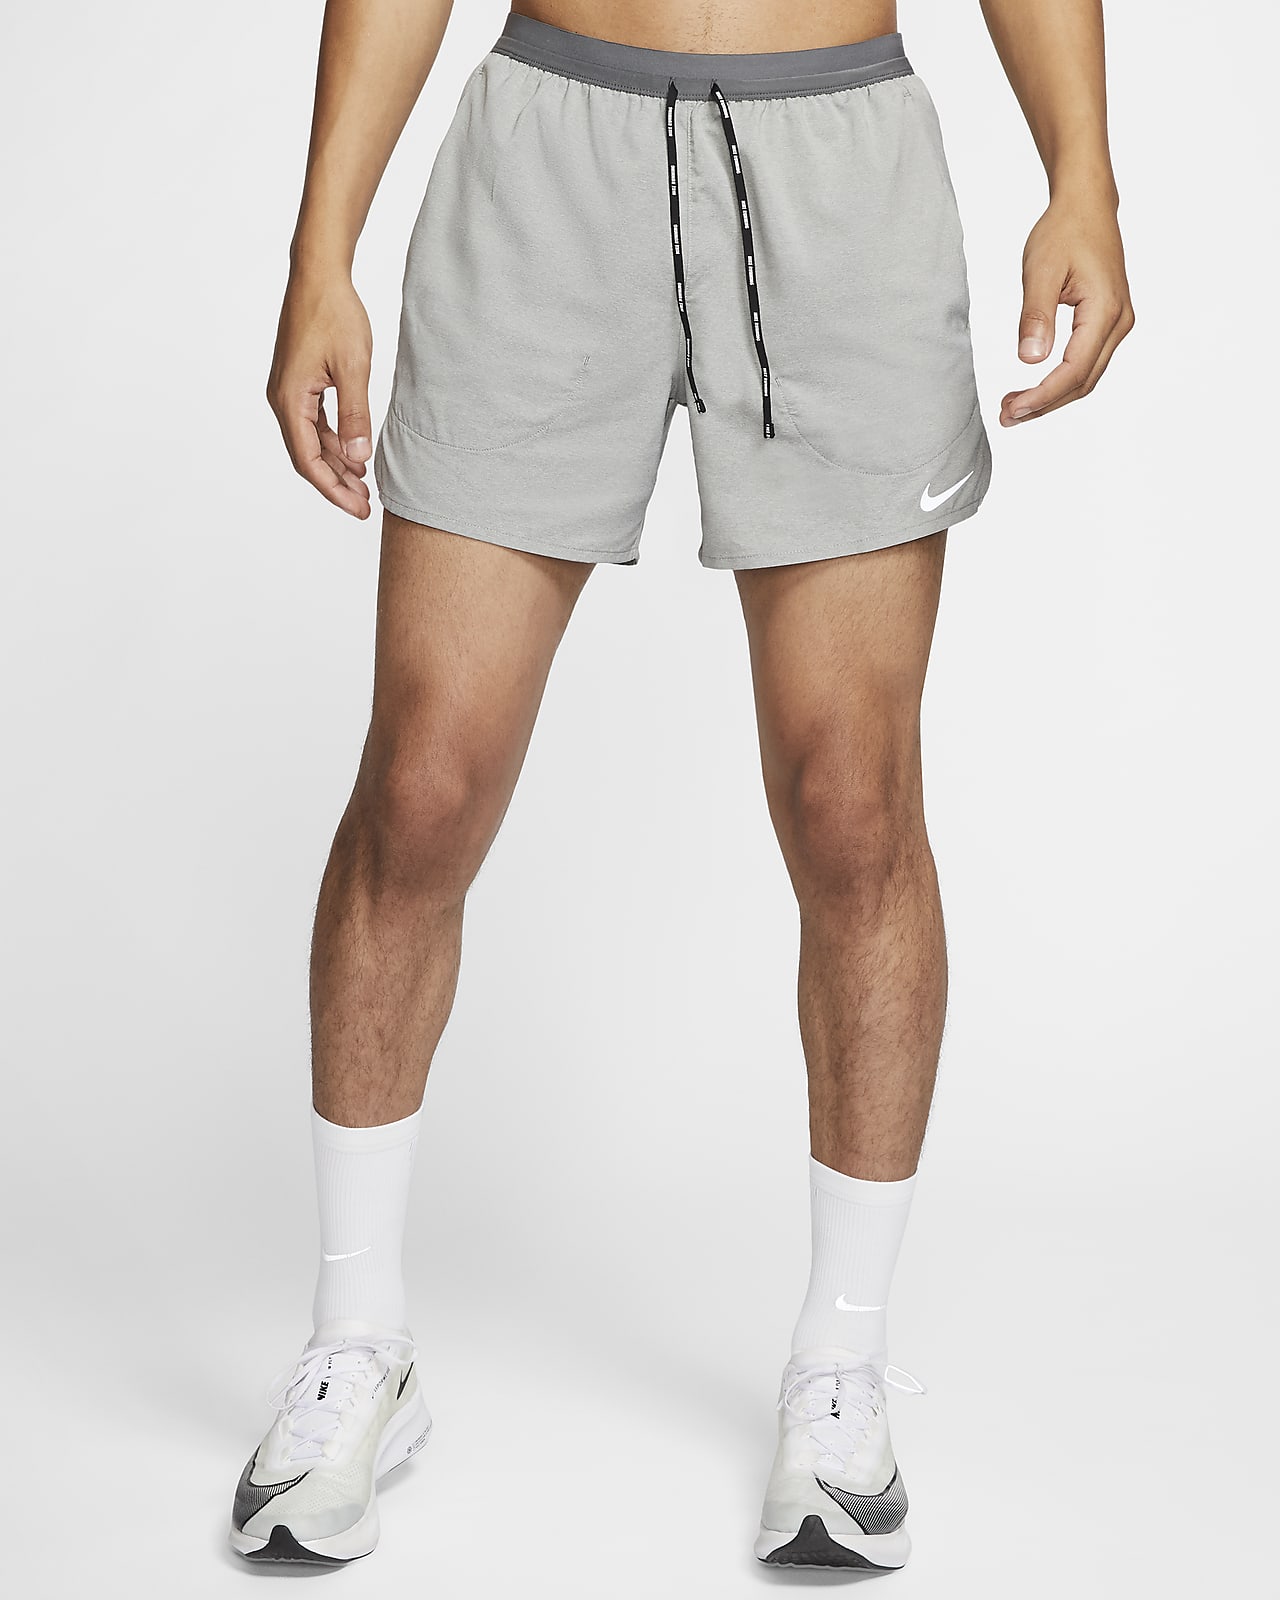 nike flex men's 8 inch training shorts